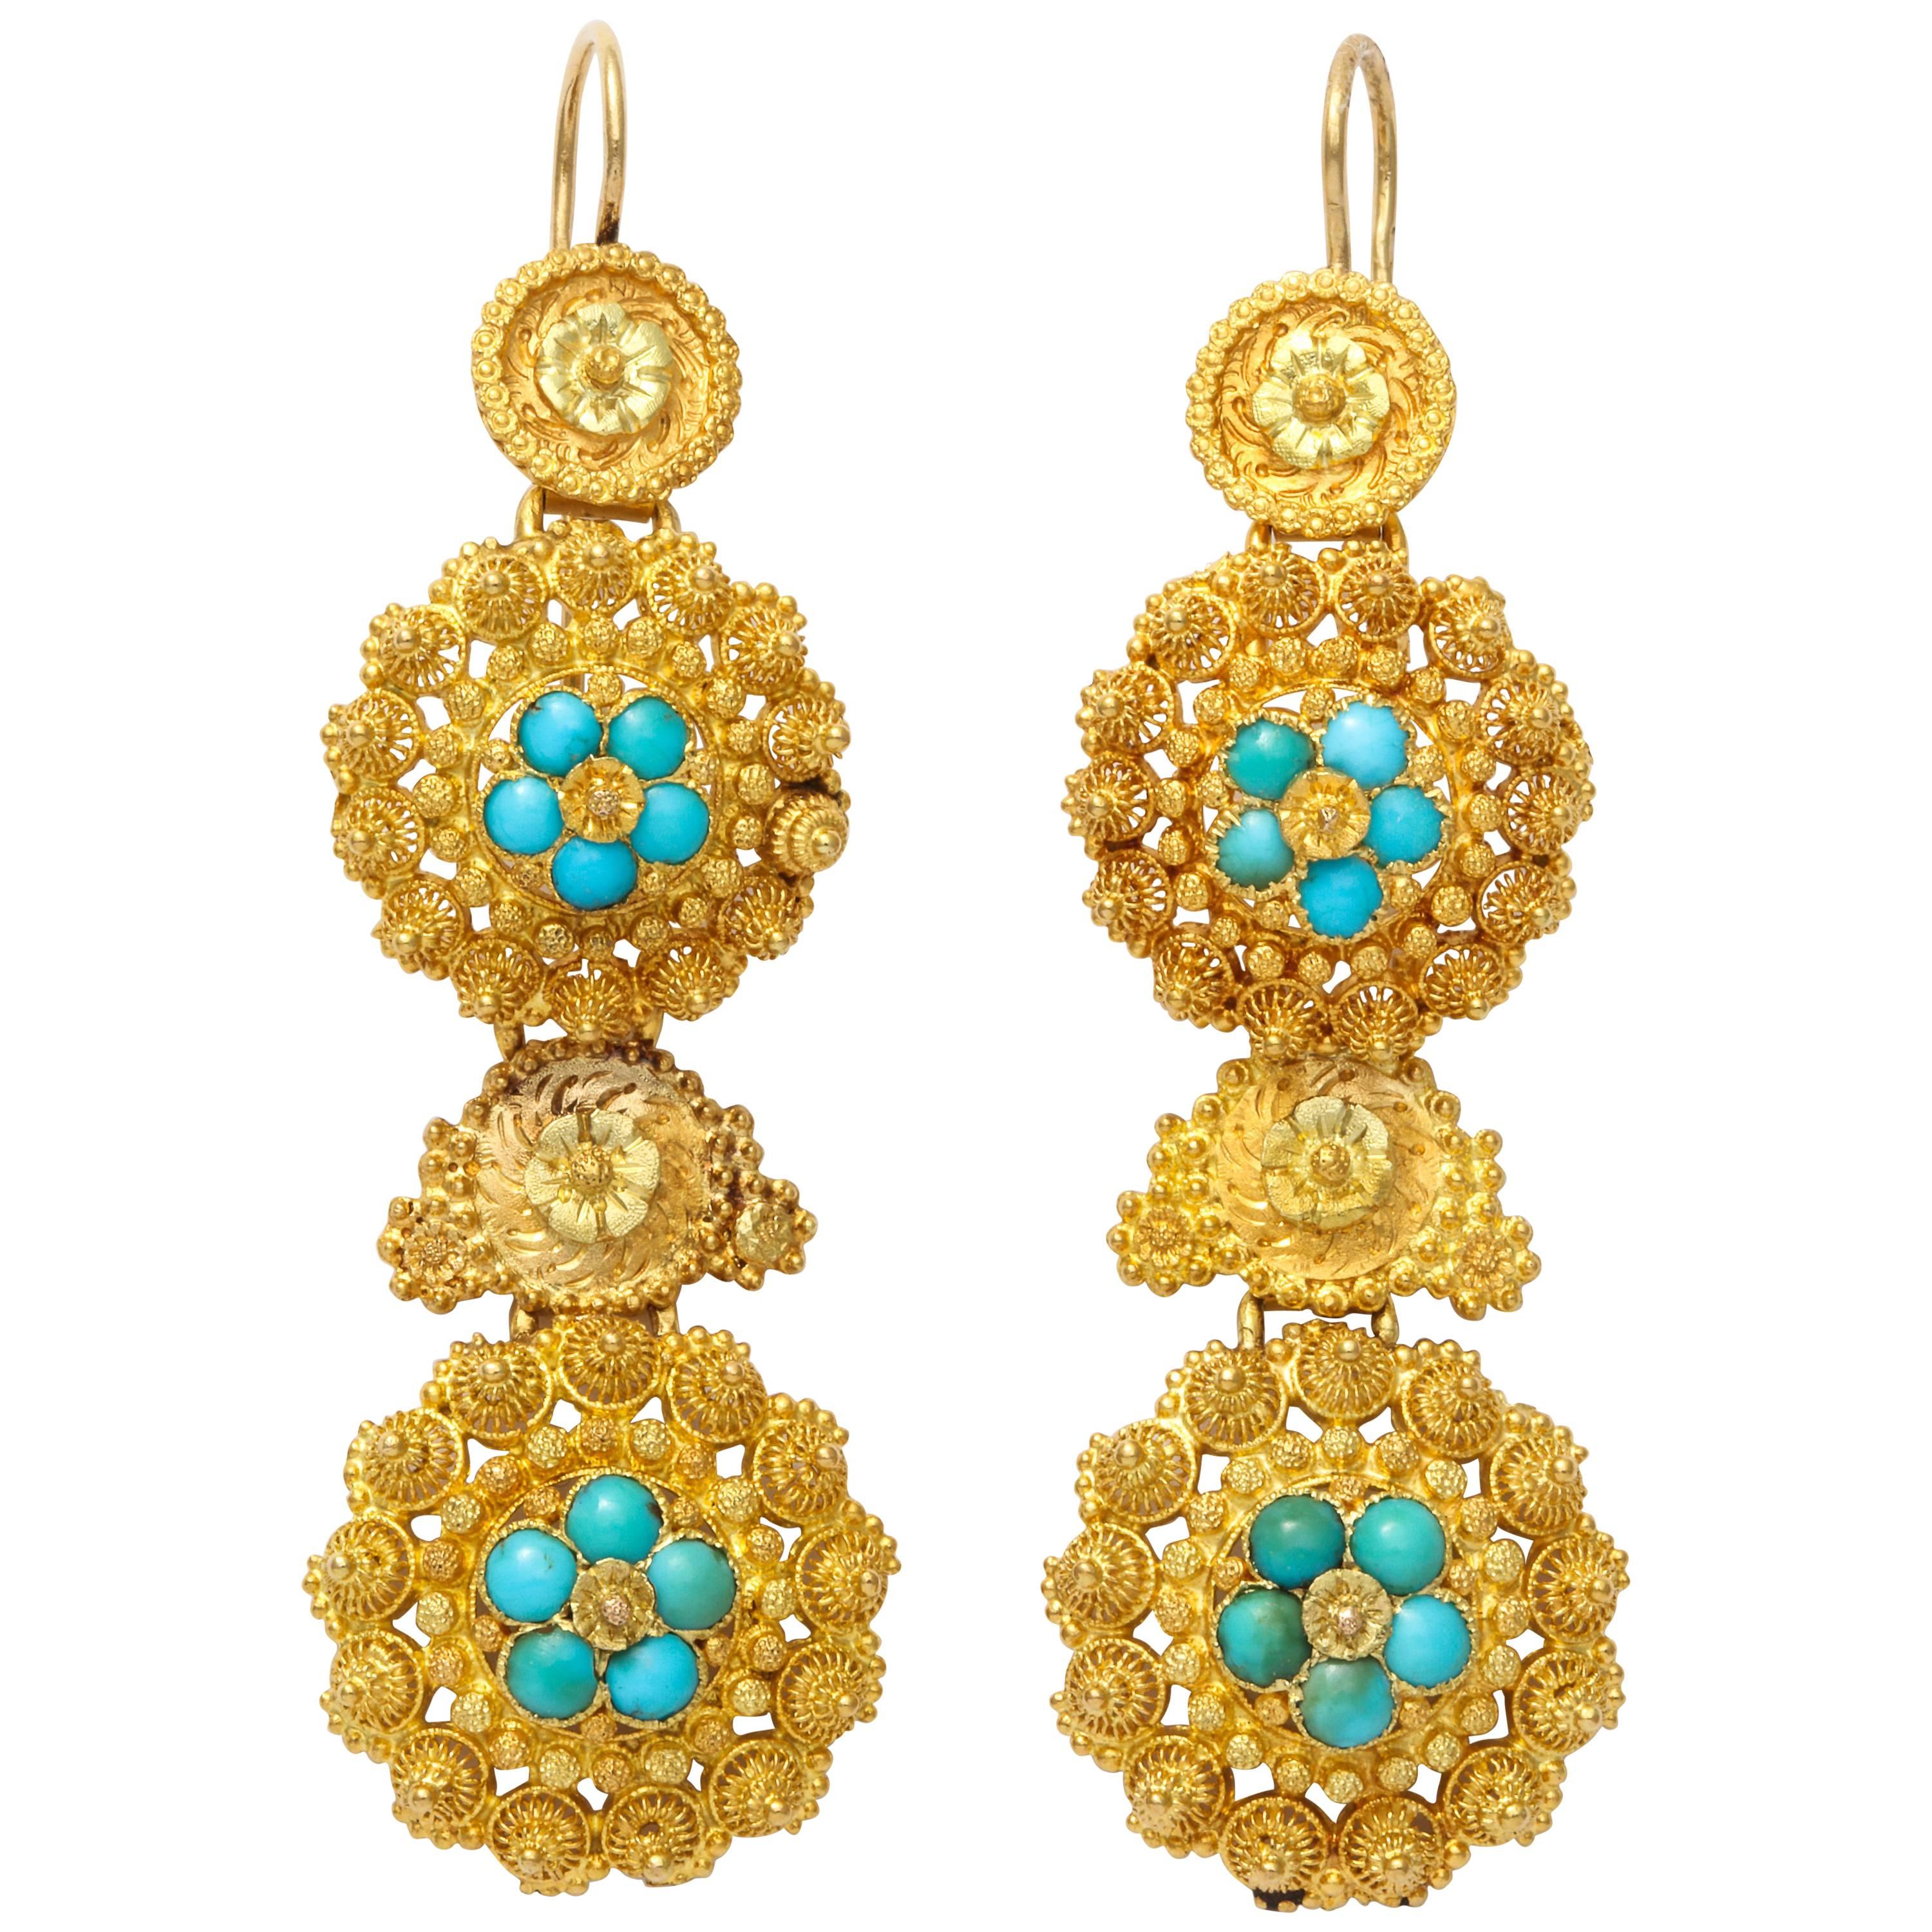 Antique Regency Cannetille Gold Turquoise Chandelier Earrings